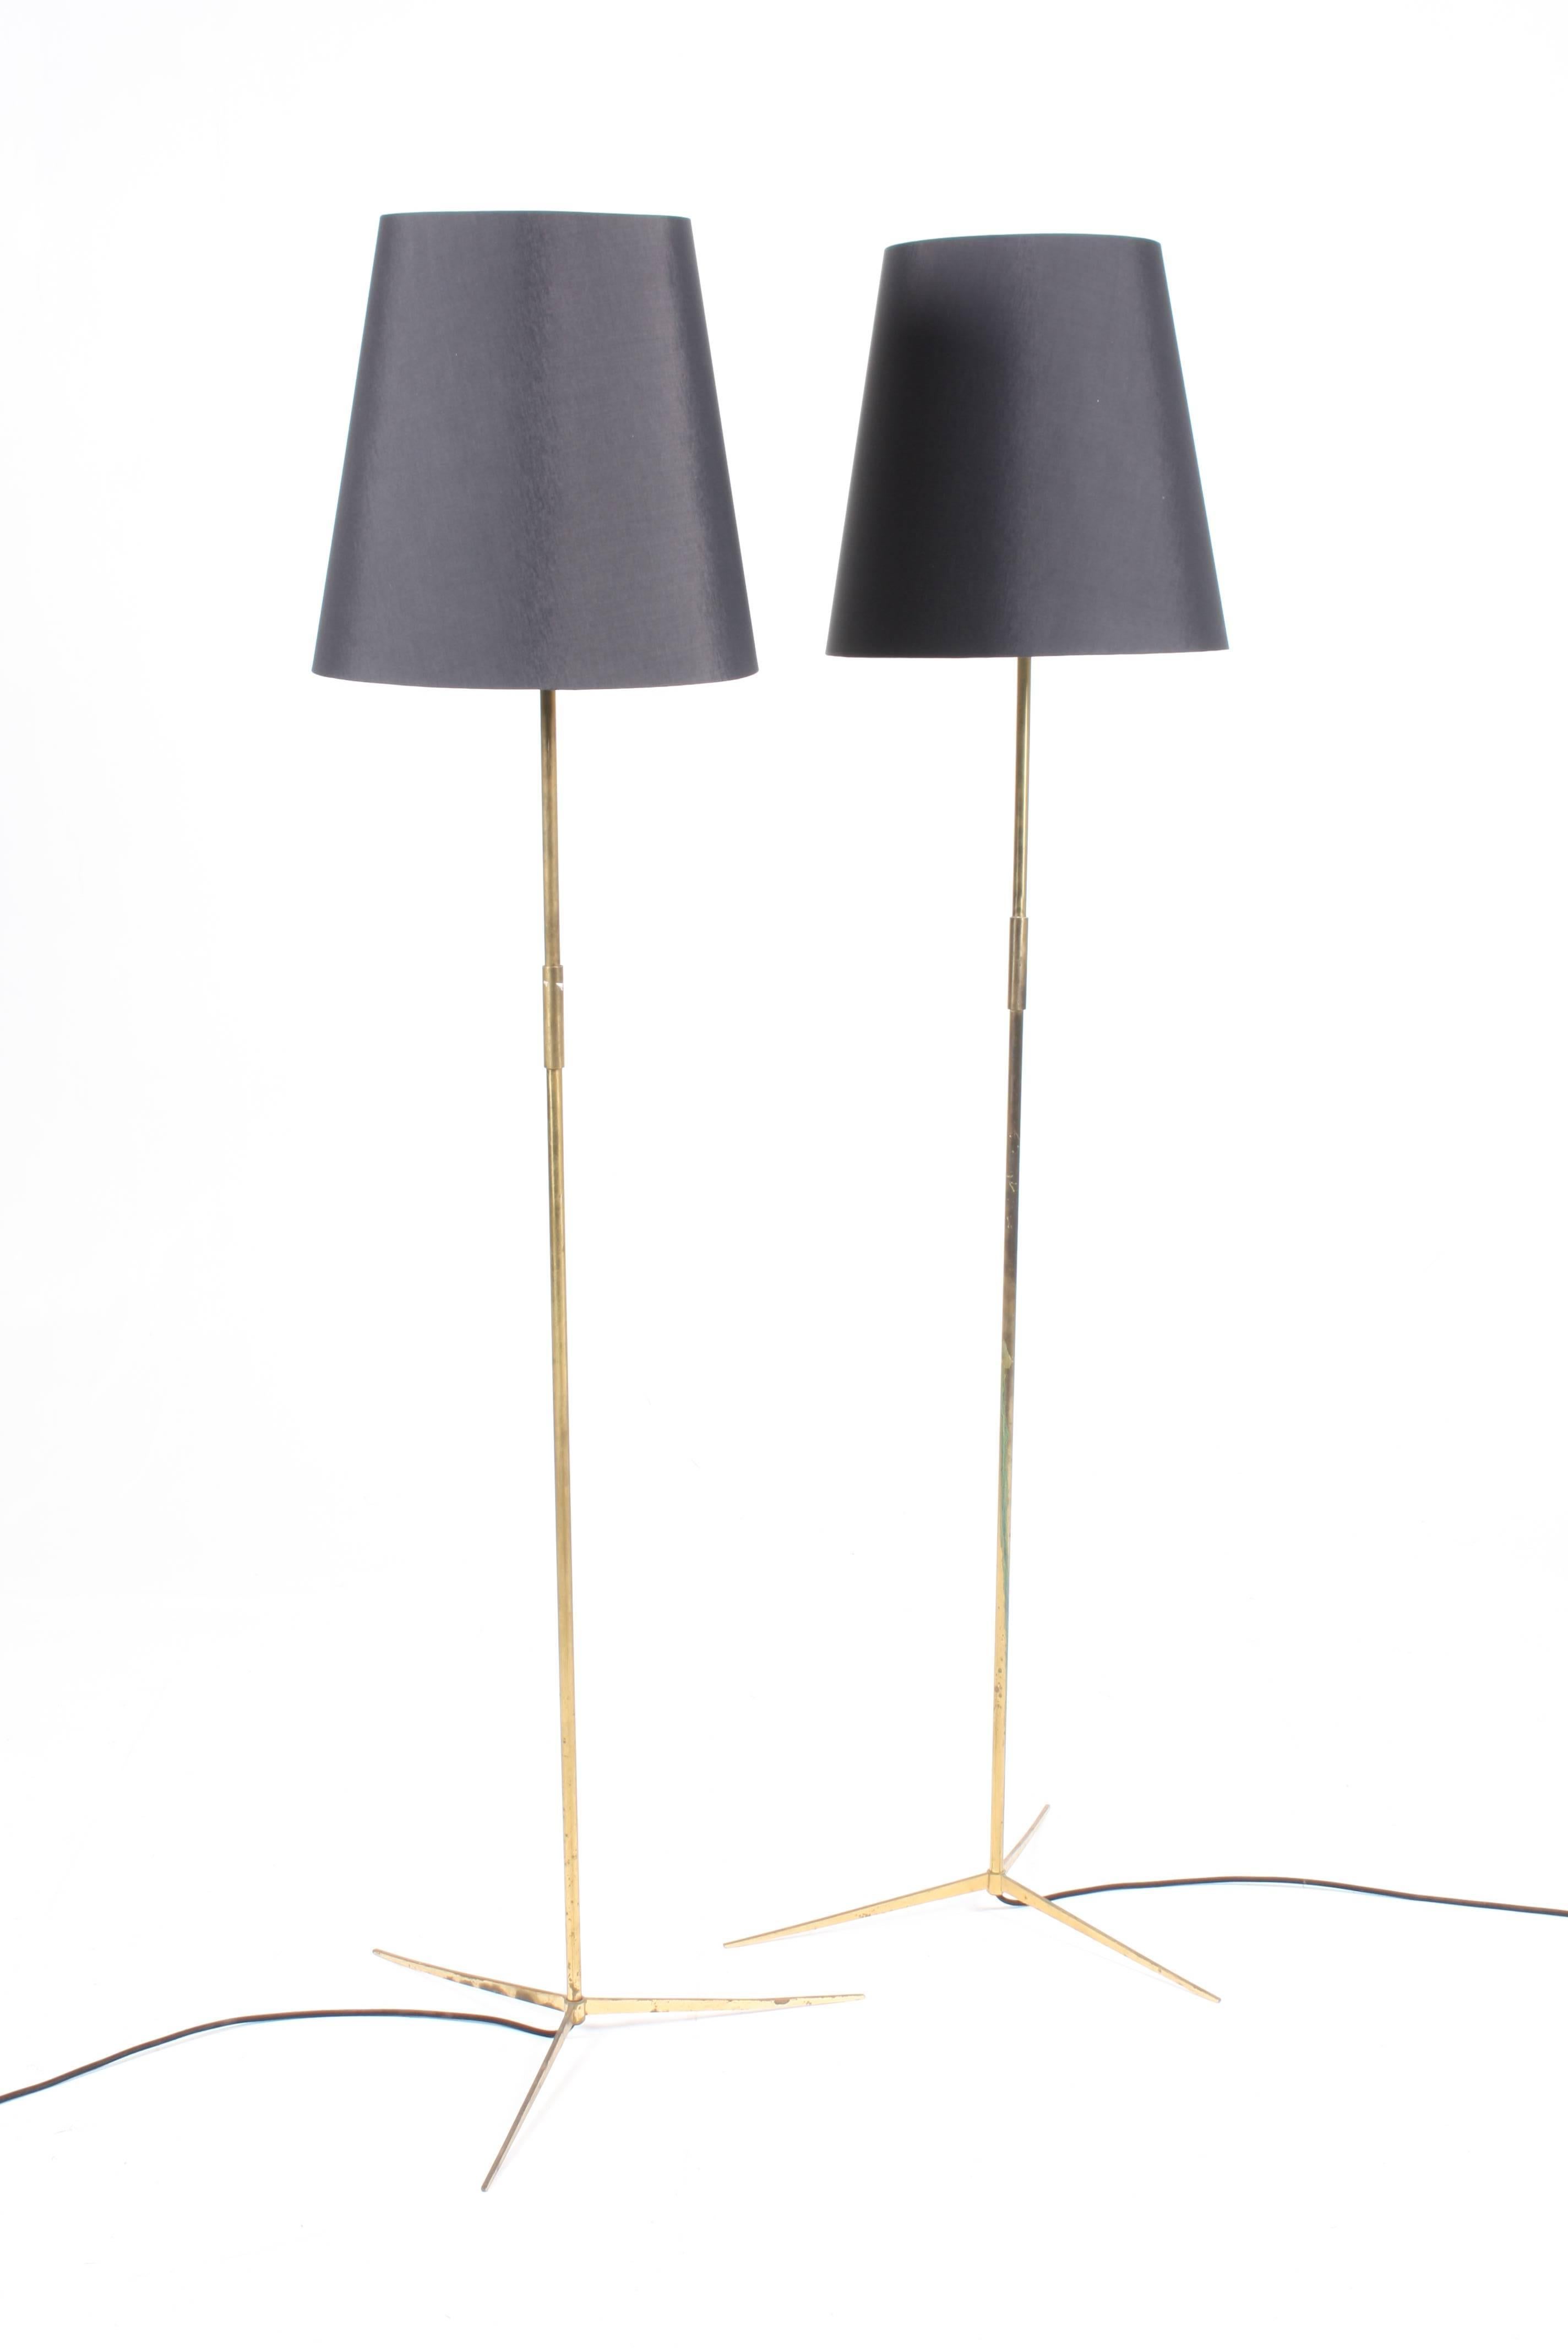 Scandinavian Modern Pair of Elegant Floor Lamps in Brass By Holm Sørensen